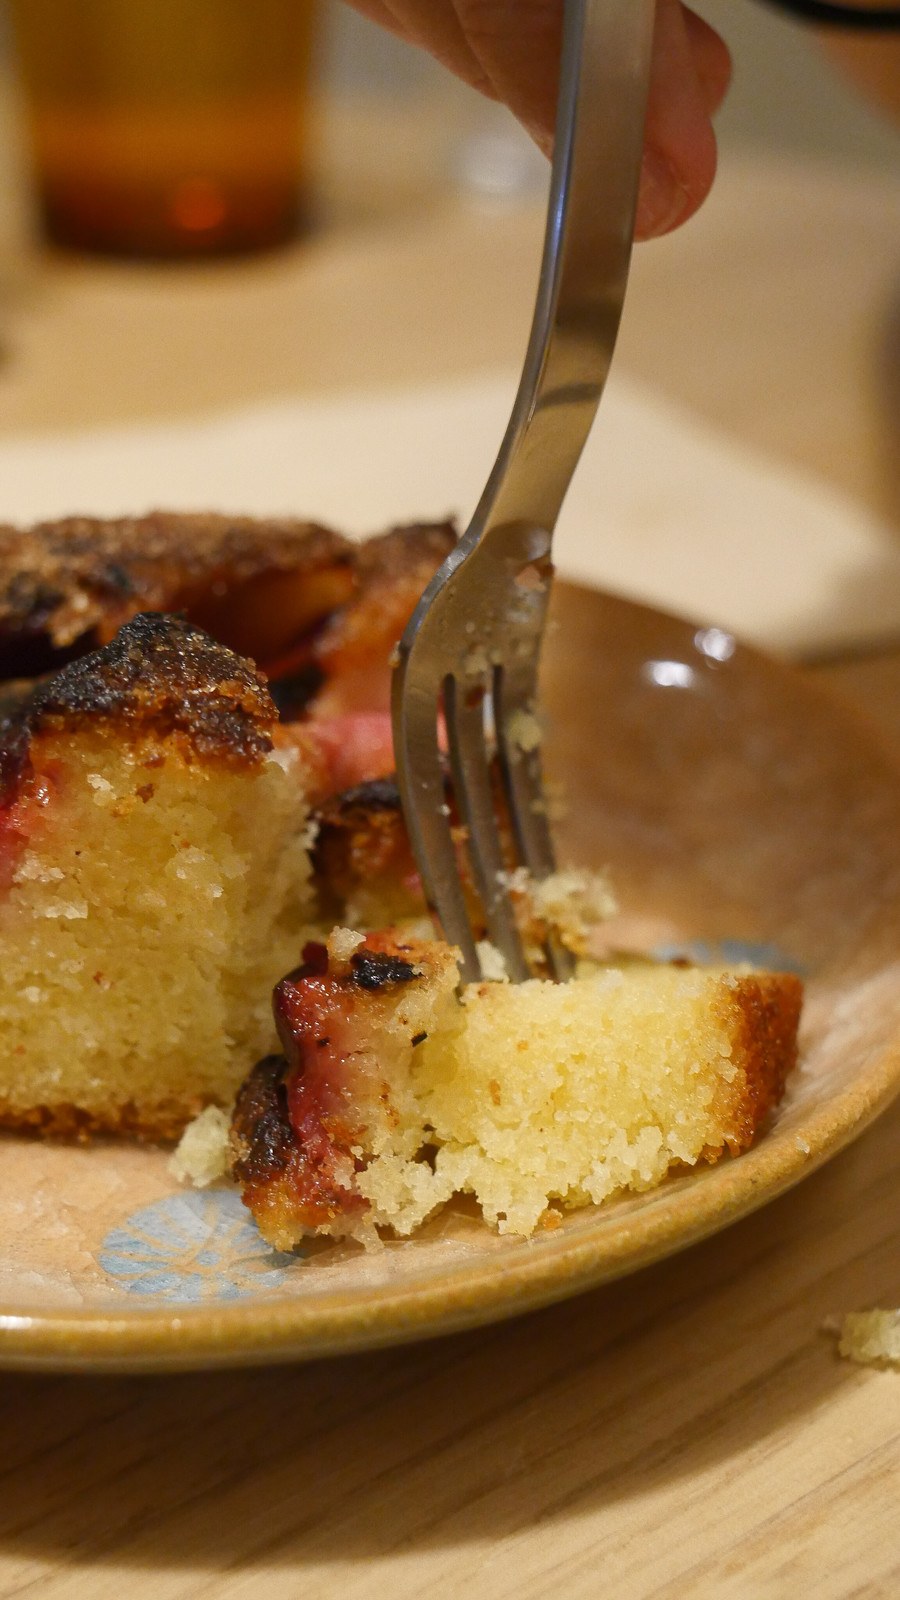 DAWN - plum cake fork in